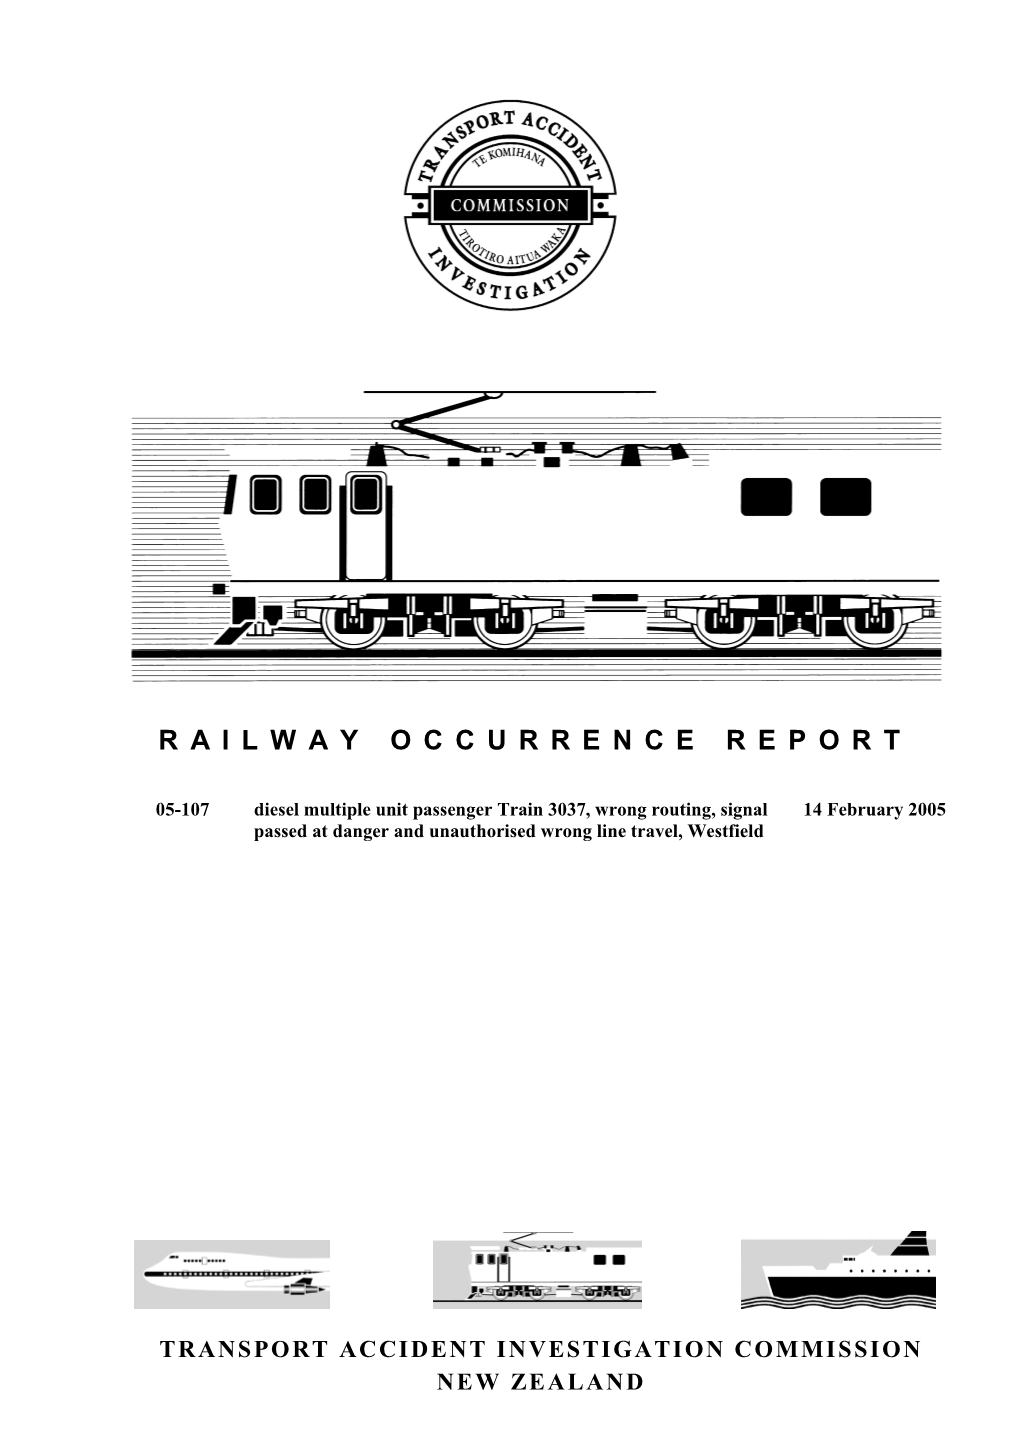 05-107. Diesel Multiple Unit Passenger Train 3037, Wrong